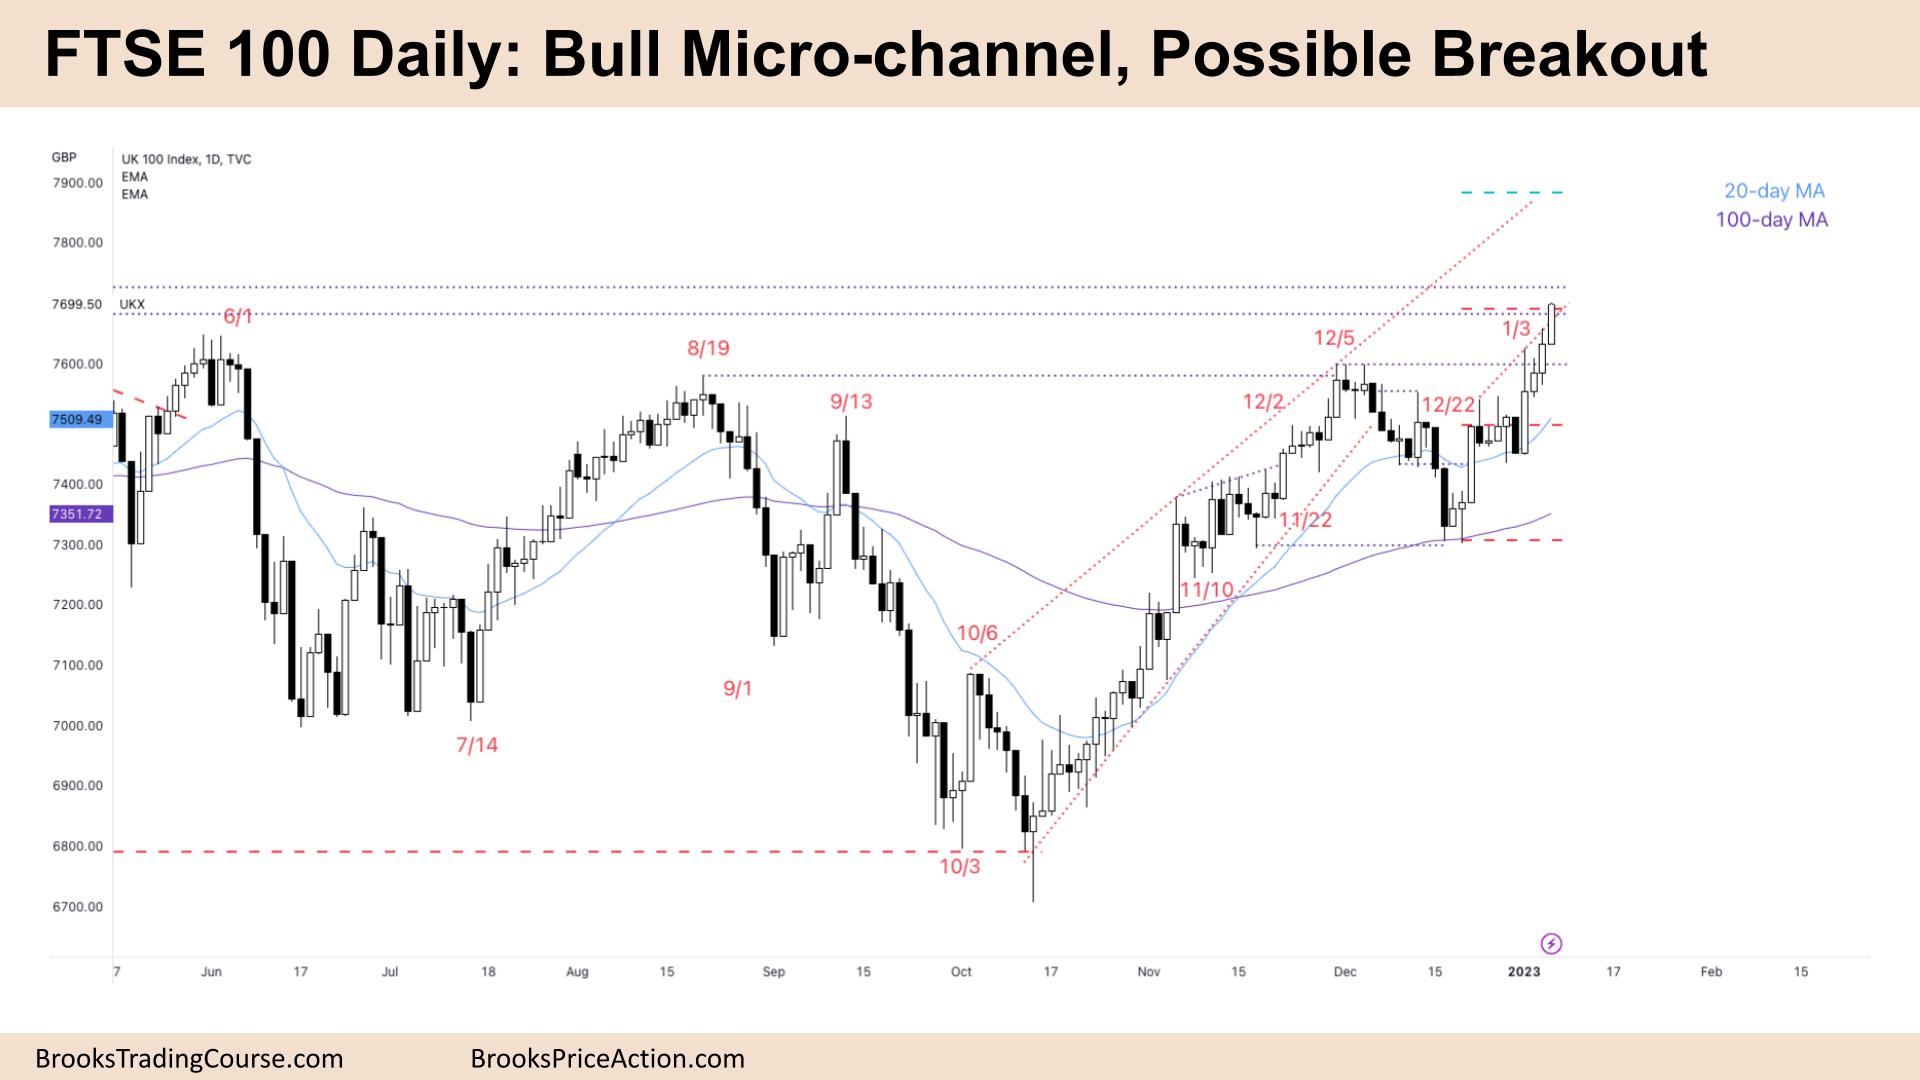 FTSE 100 Bull Micro-channel, Possible Breakout